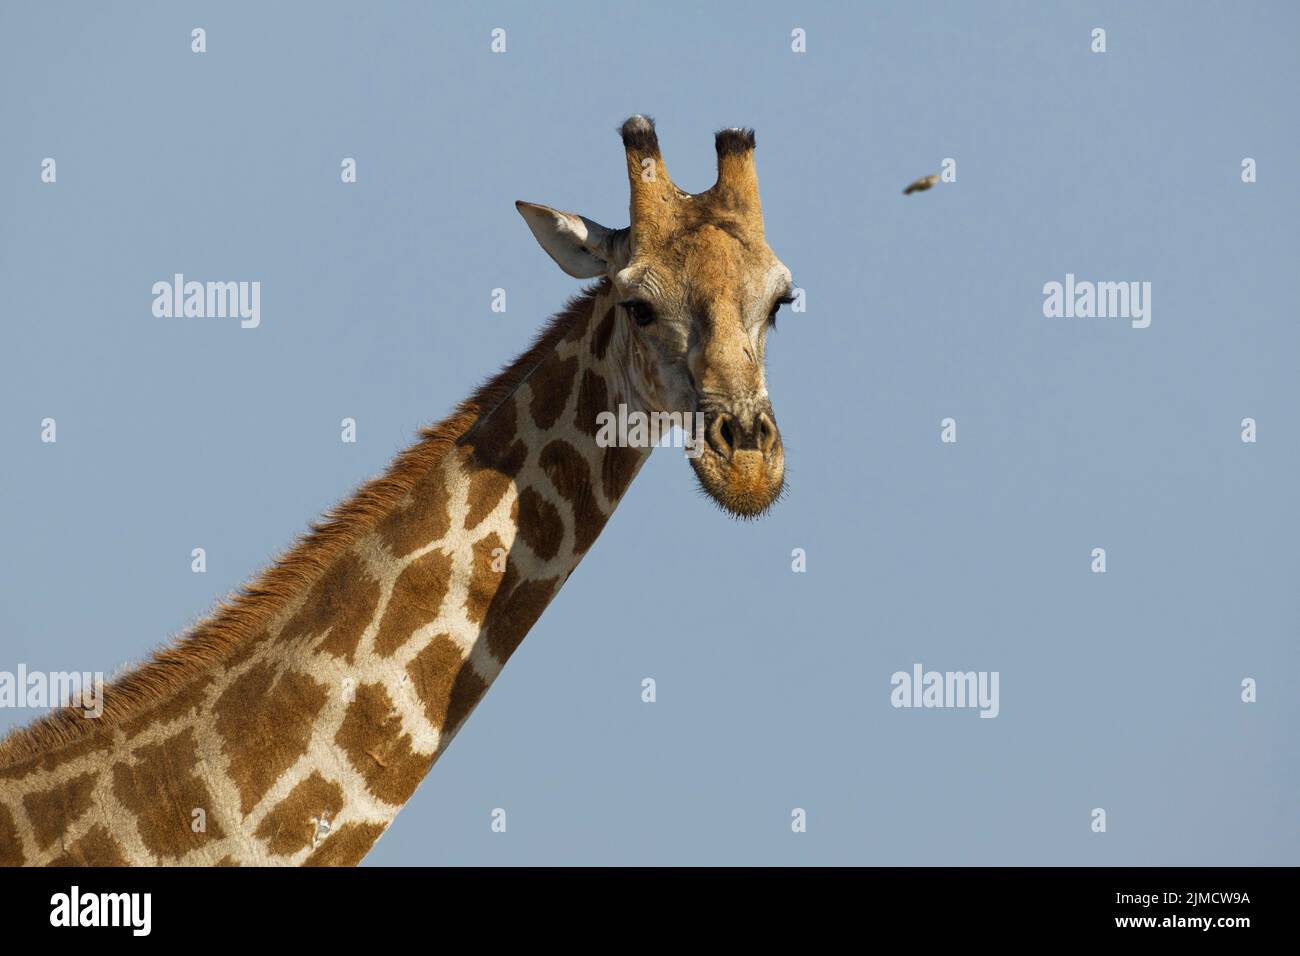 Angolanische Giraffe (Giraffa camelopardalis angolensis), erwachsen, Kopfschuss gegen blauen Himmel, Tierporträt, Etosha-Nationalpark, Namibia, Afrika Stockfoto